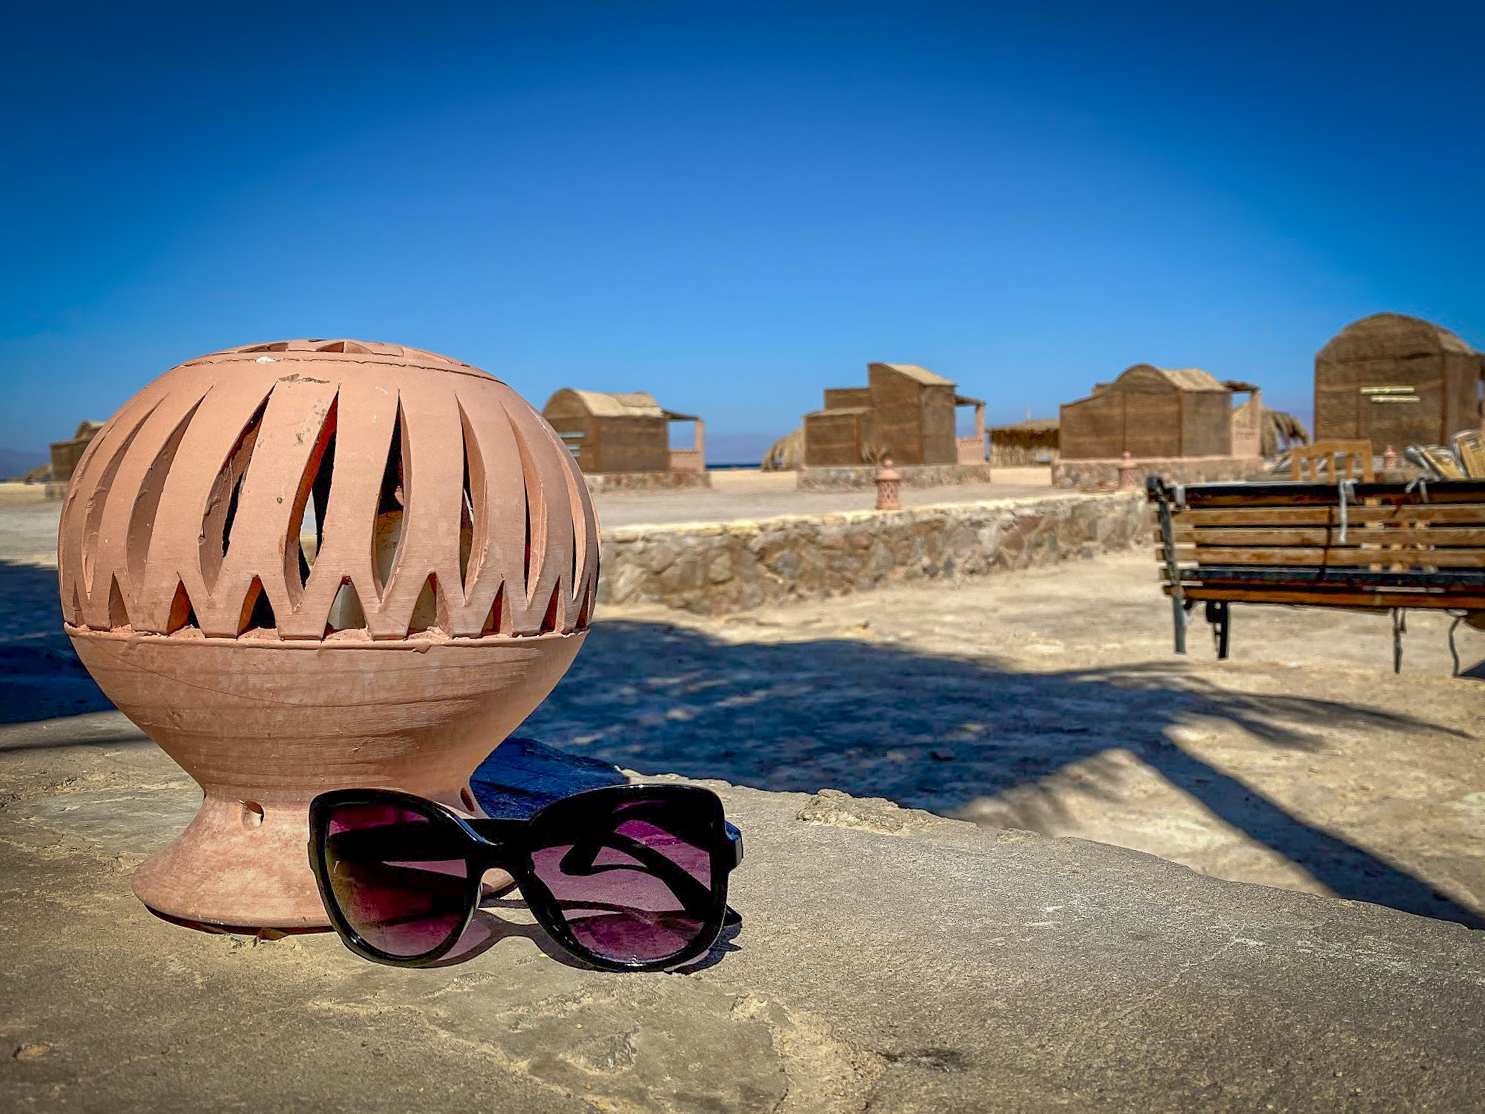 sunglasses propped next to a clay sphere lantern at Aqua Sun, Gulf of Aqaba, Egypt